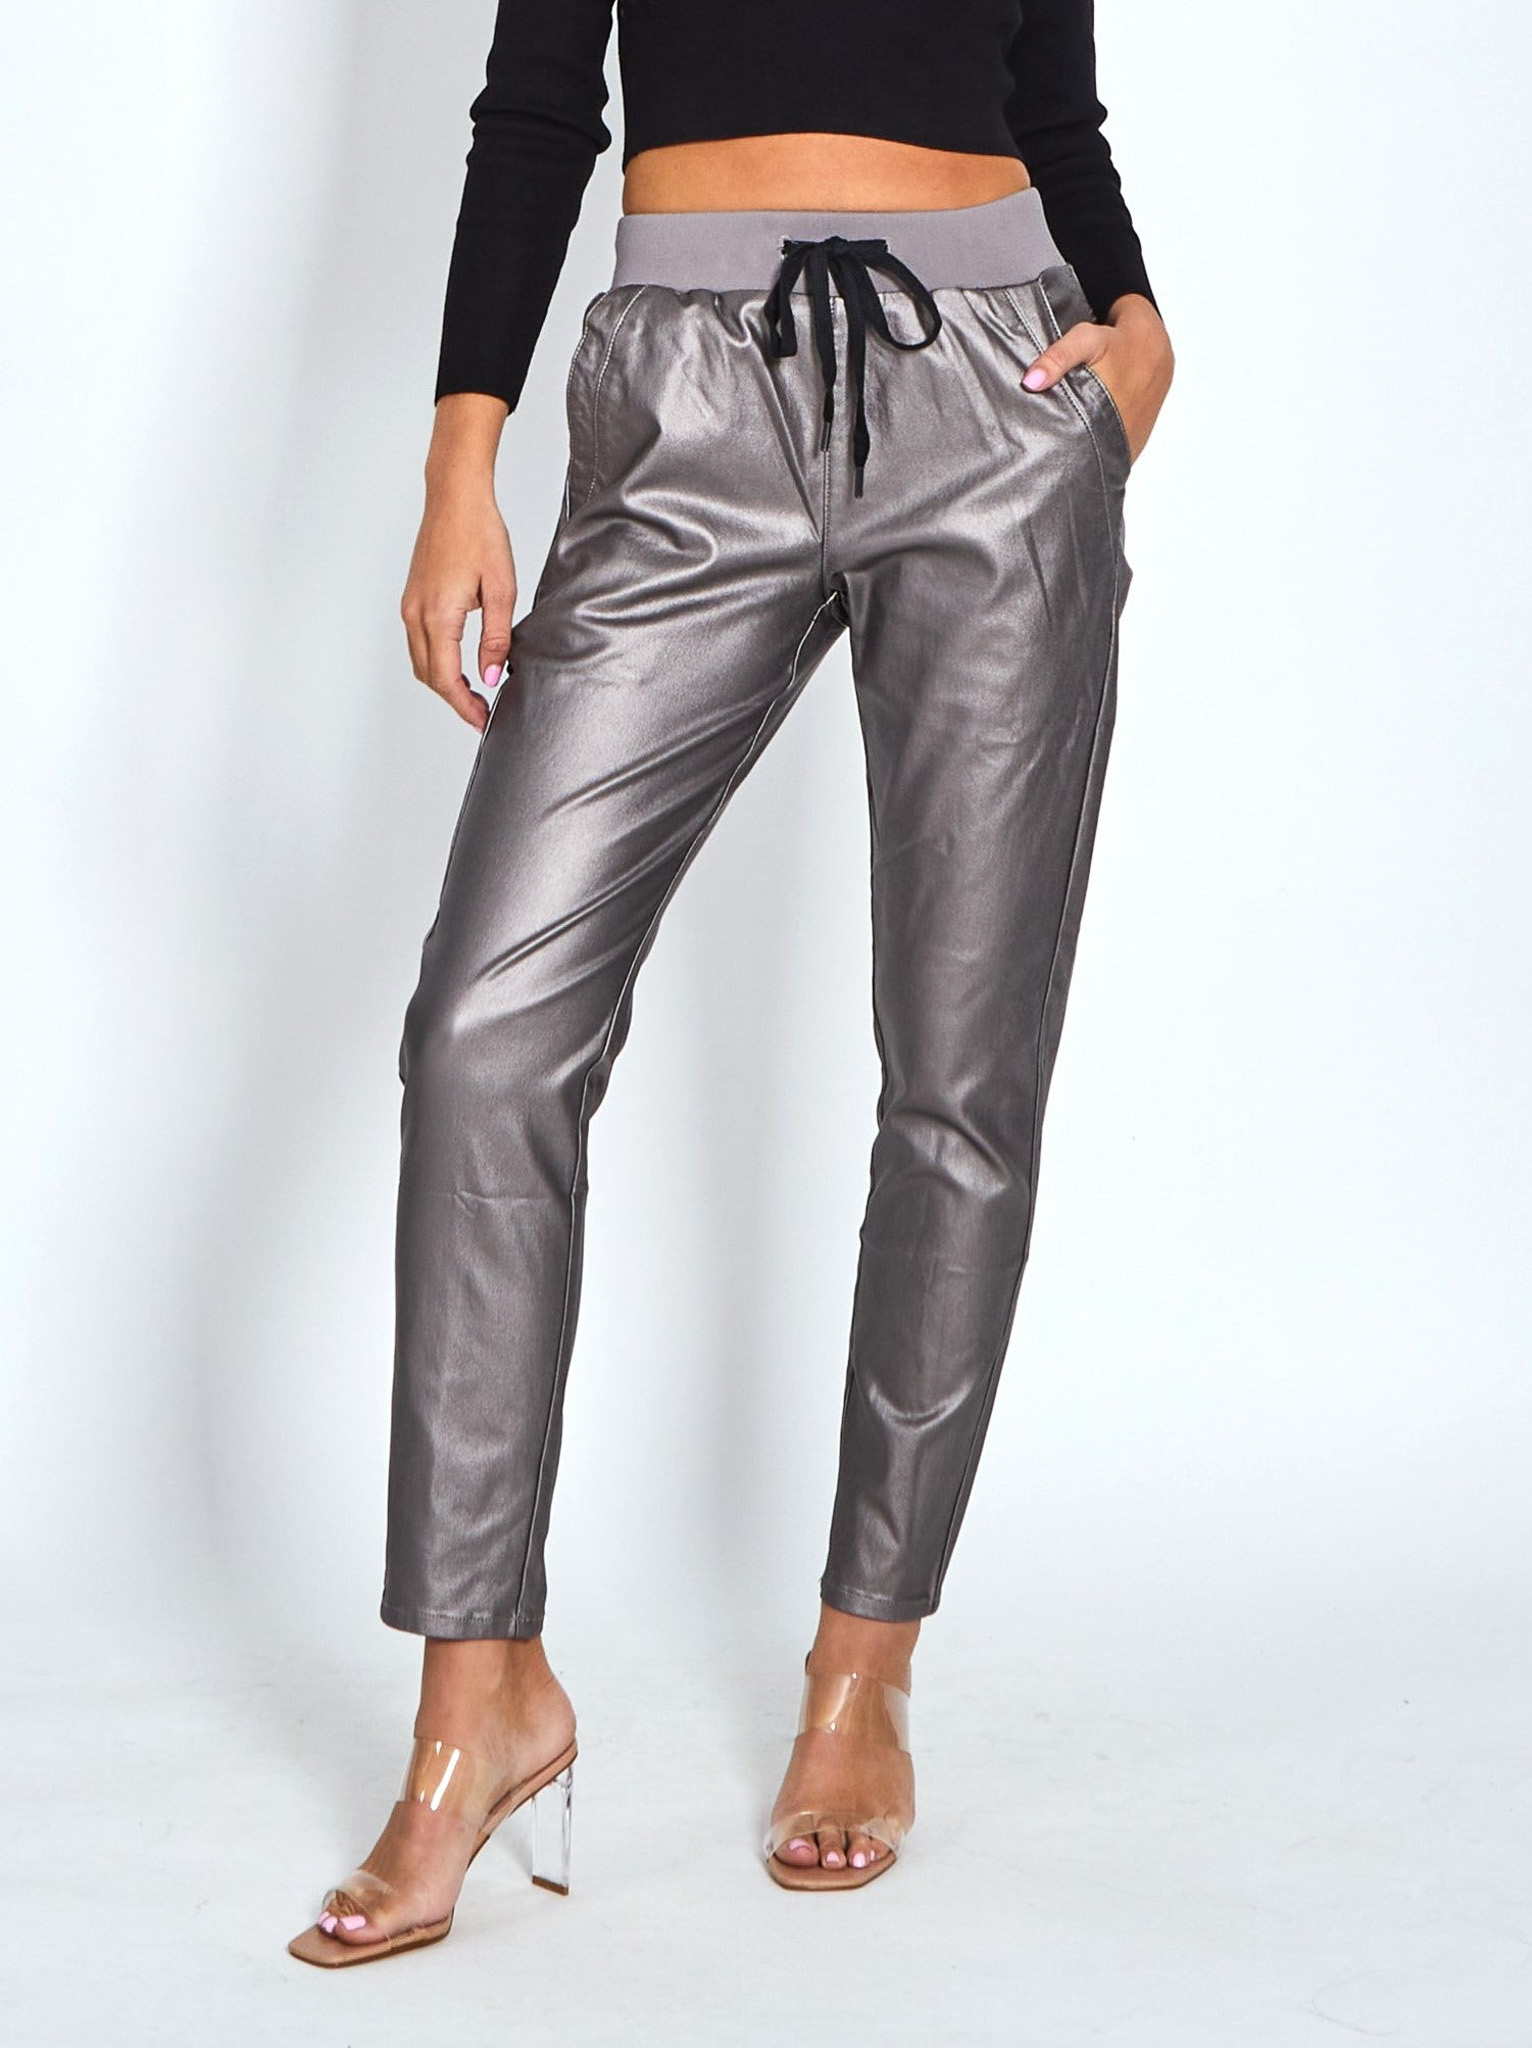 RYRJJ Womens Shiny Metallic High Waist Stretchy Jogger Pants Wet Look  Hip-Hop Club Wear Trousers Sweatpant(Silver,XXL) - Walmart.com